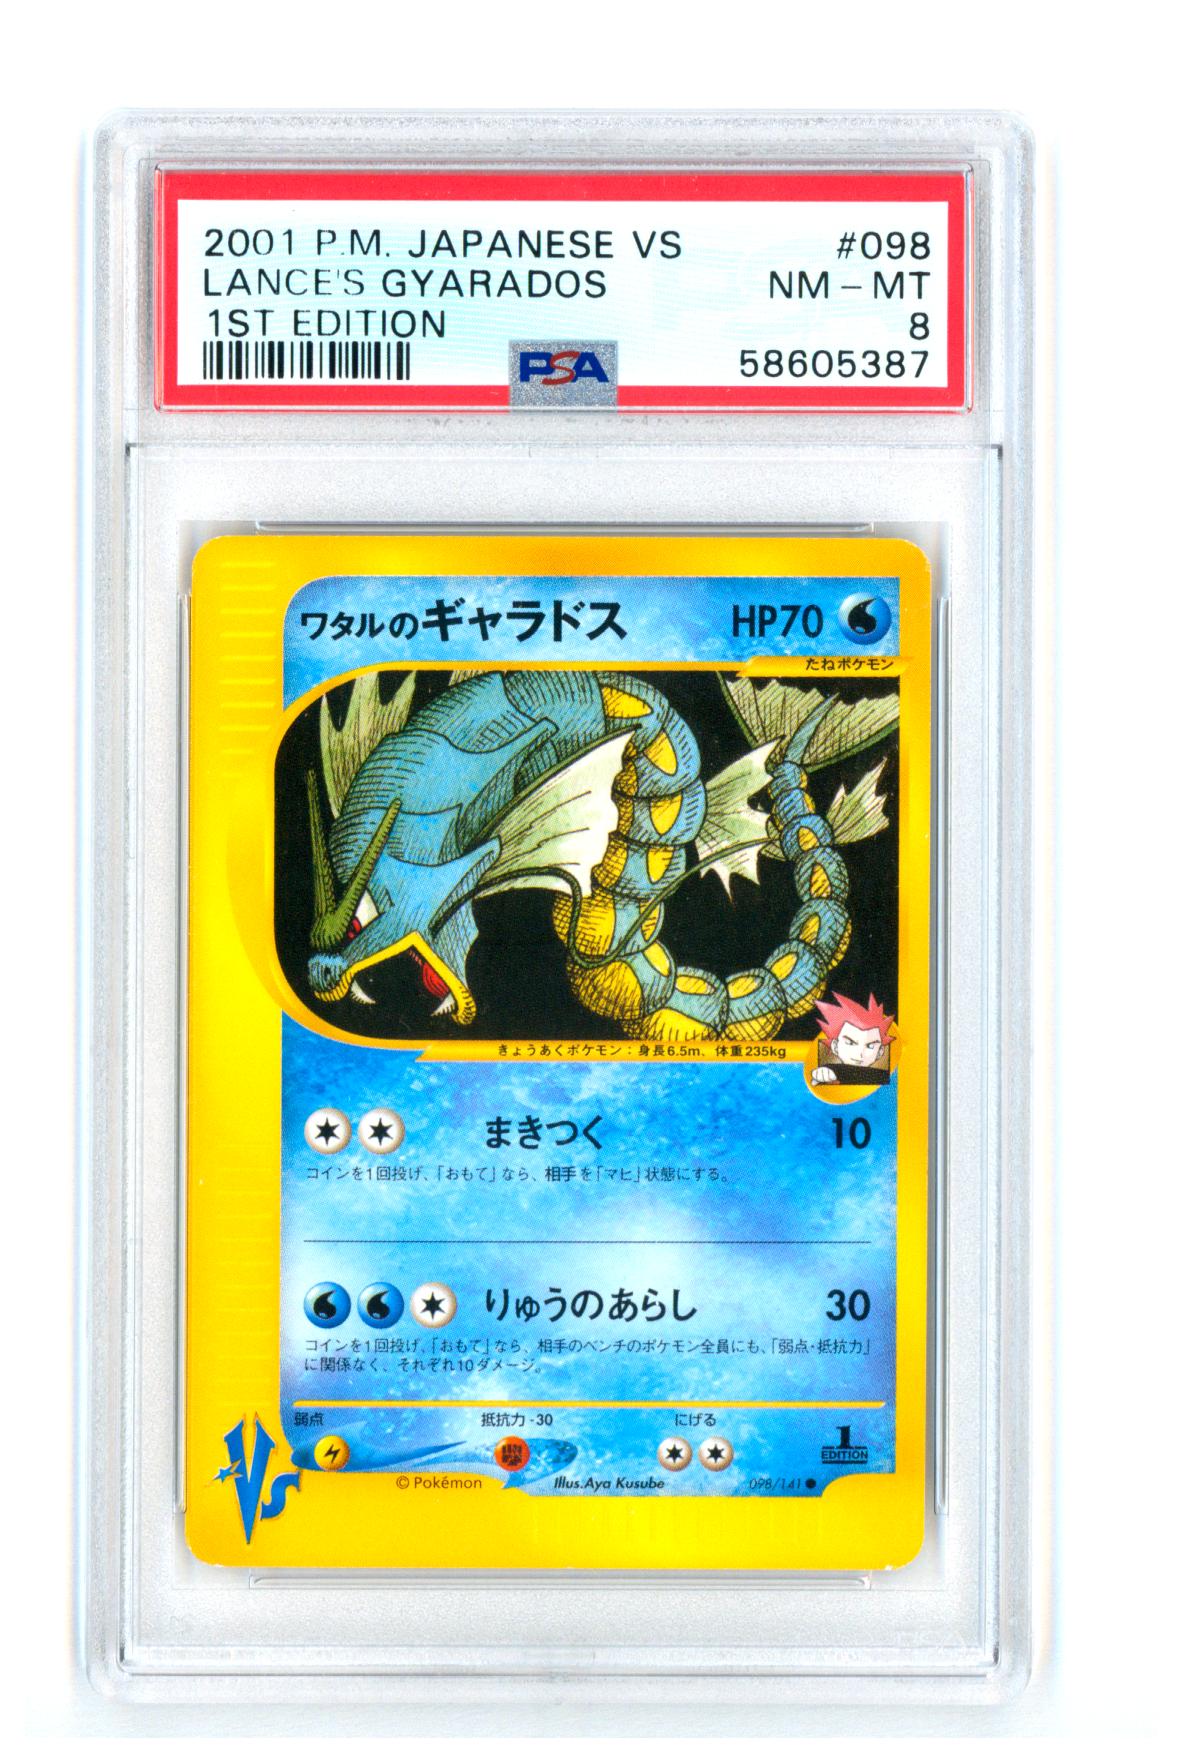 Lance's Gyrados - Japanese VS - 1st Edition - PSA 8 NM-MT​ - Pokémon